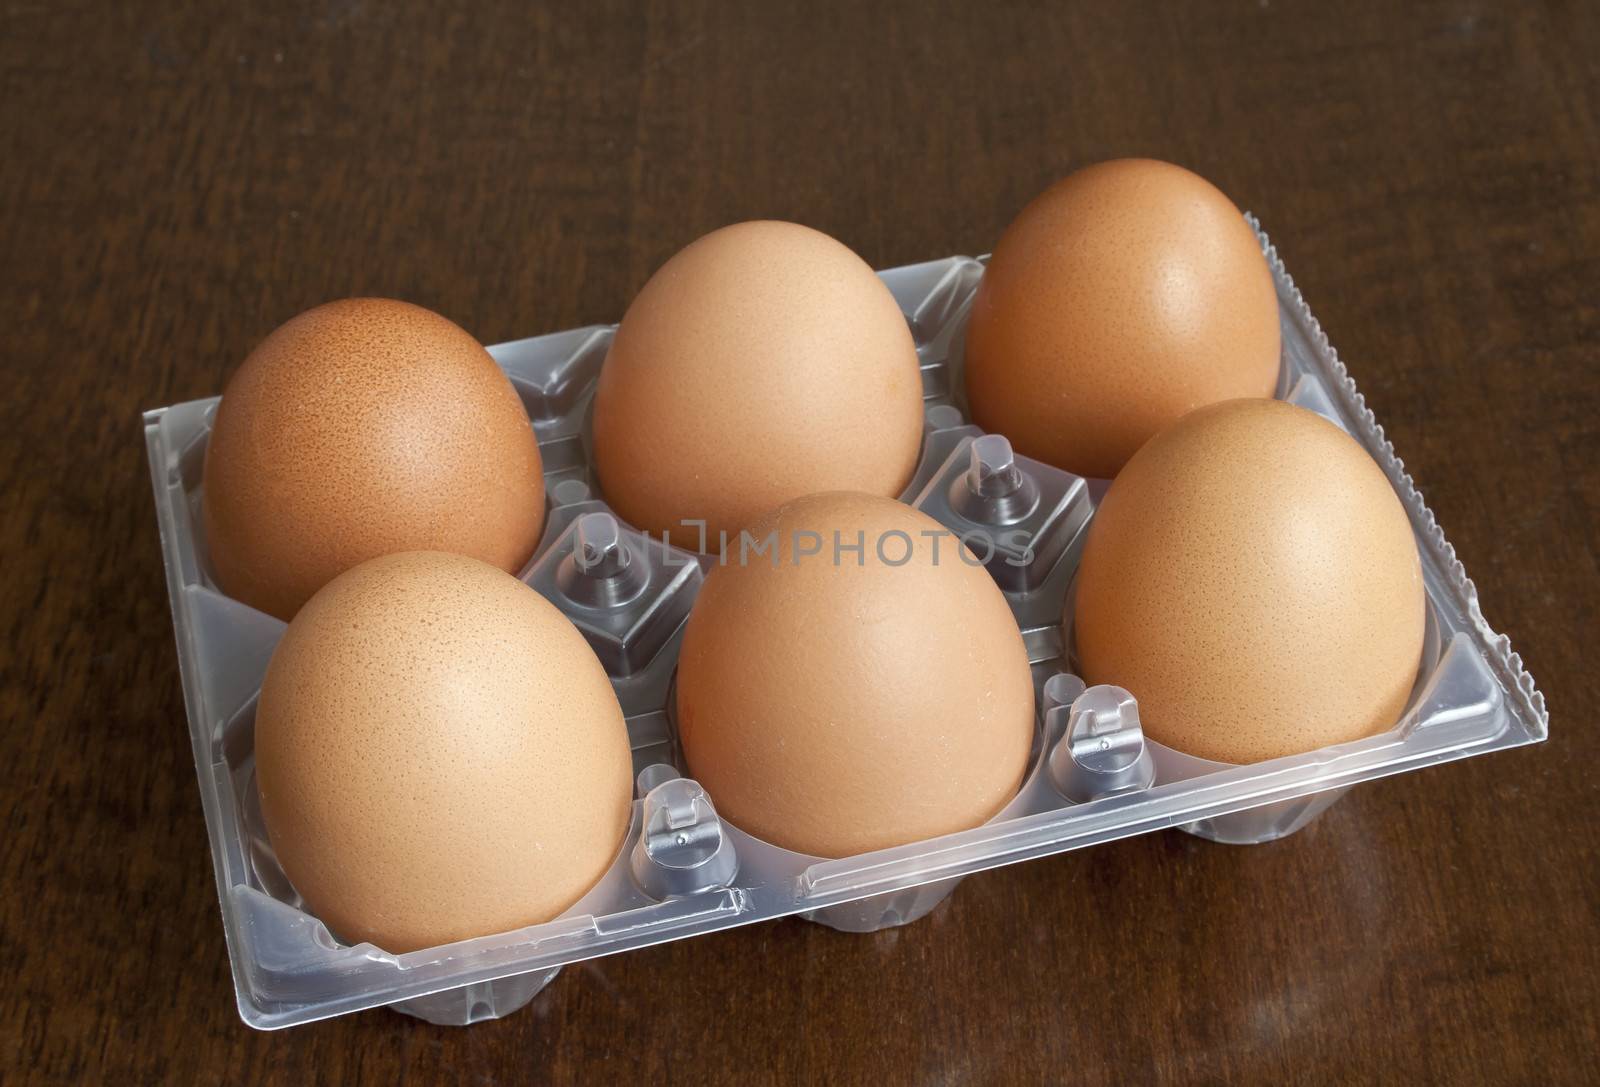 Half dozen fresh hen eggs in plastic box